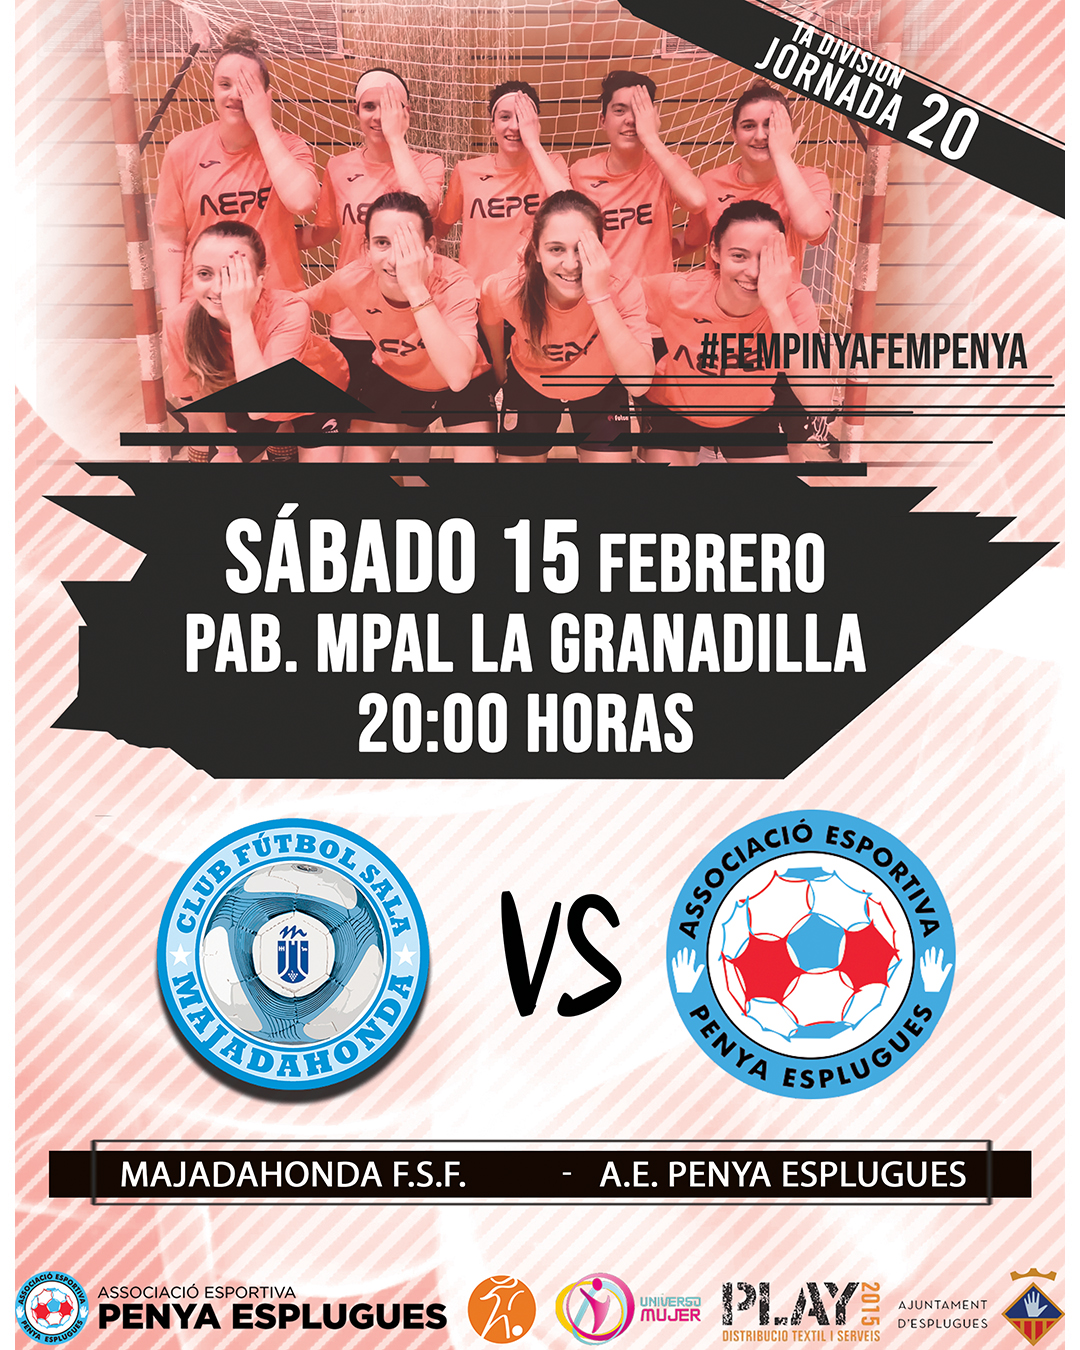 Previa: FS Majadahonda - AE Penya Esplugues. Jornada 20ª. 1ª División de Fútbol Sala Femenino